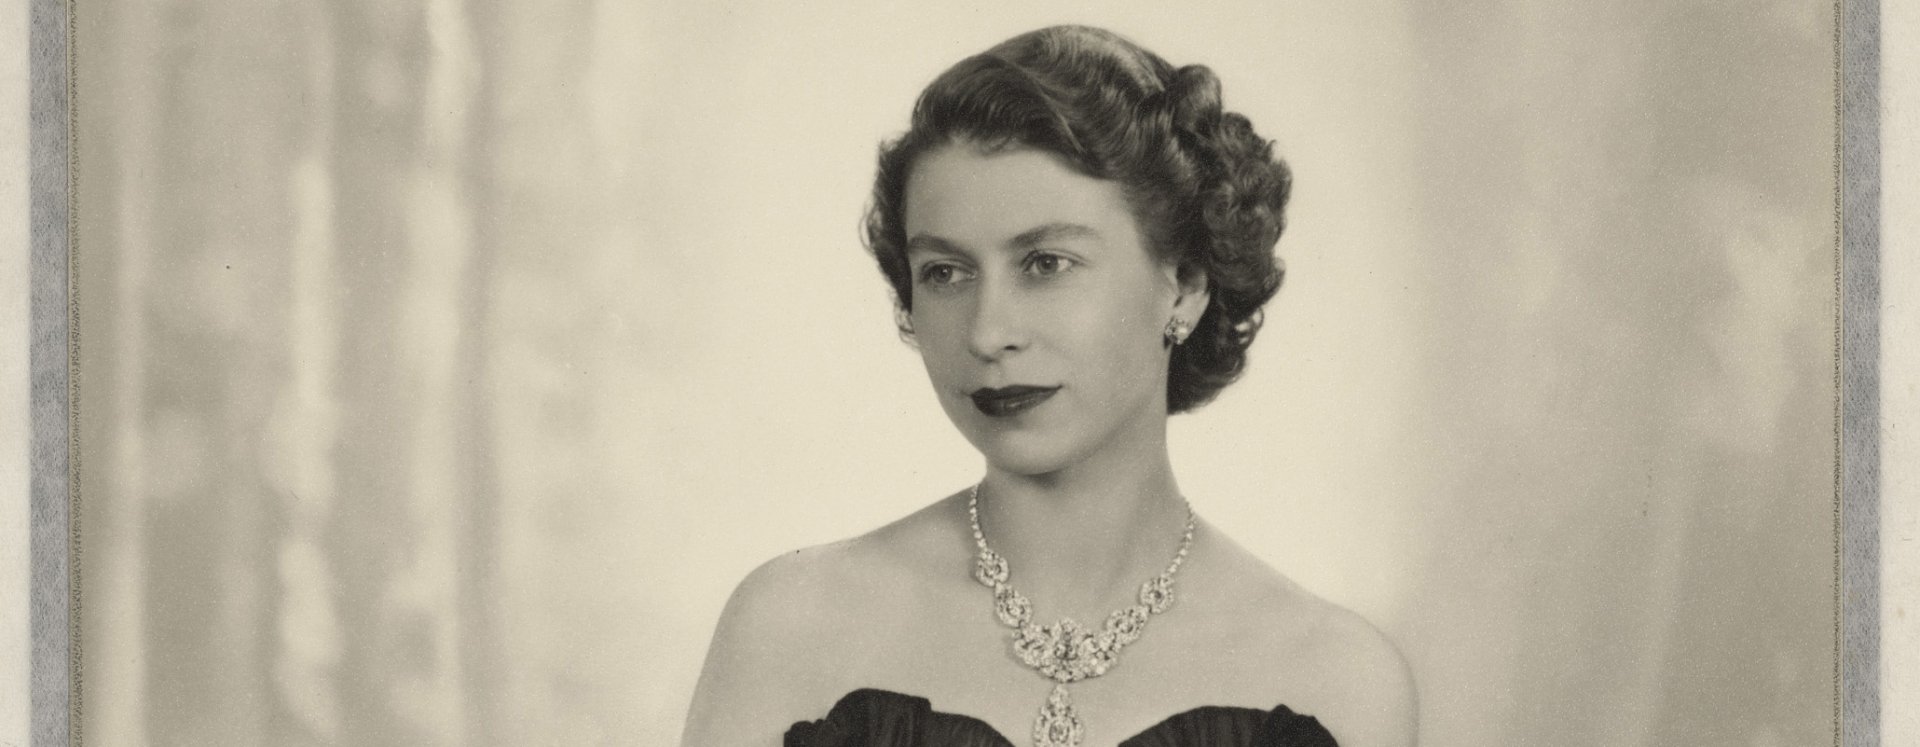 HM Queen Elizabeth II by Dorothy Wilding